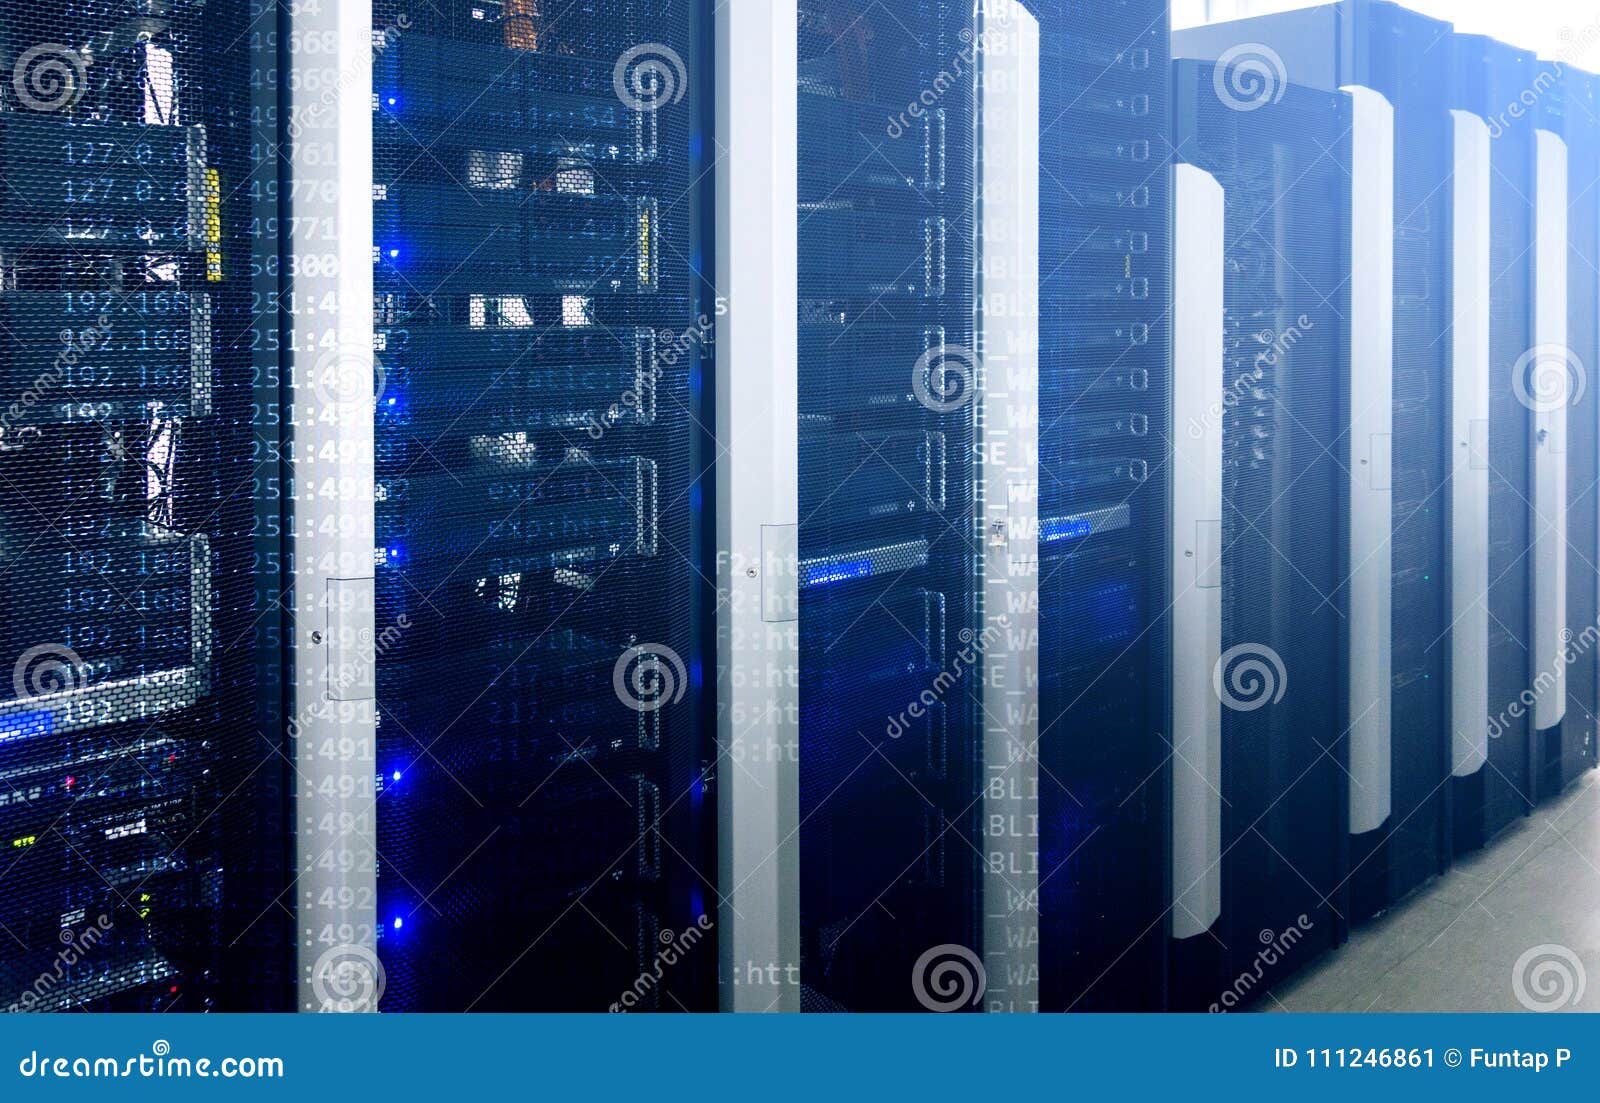 supercomputers in computational data center